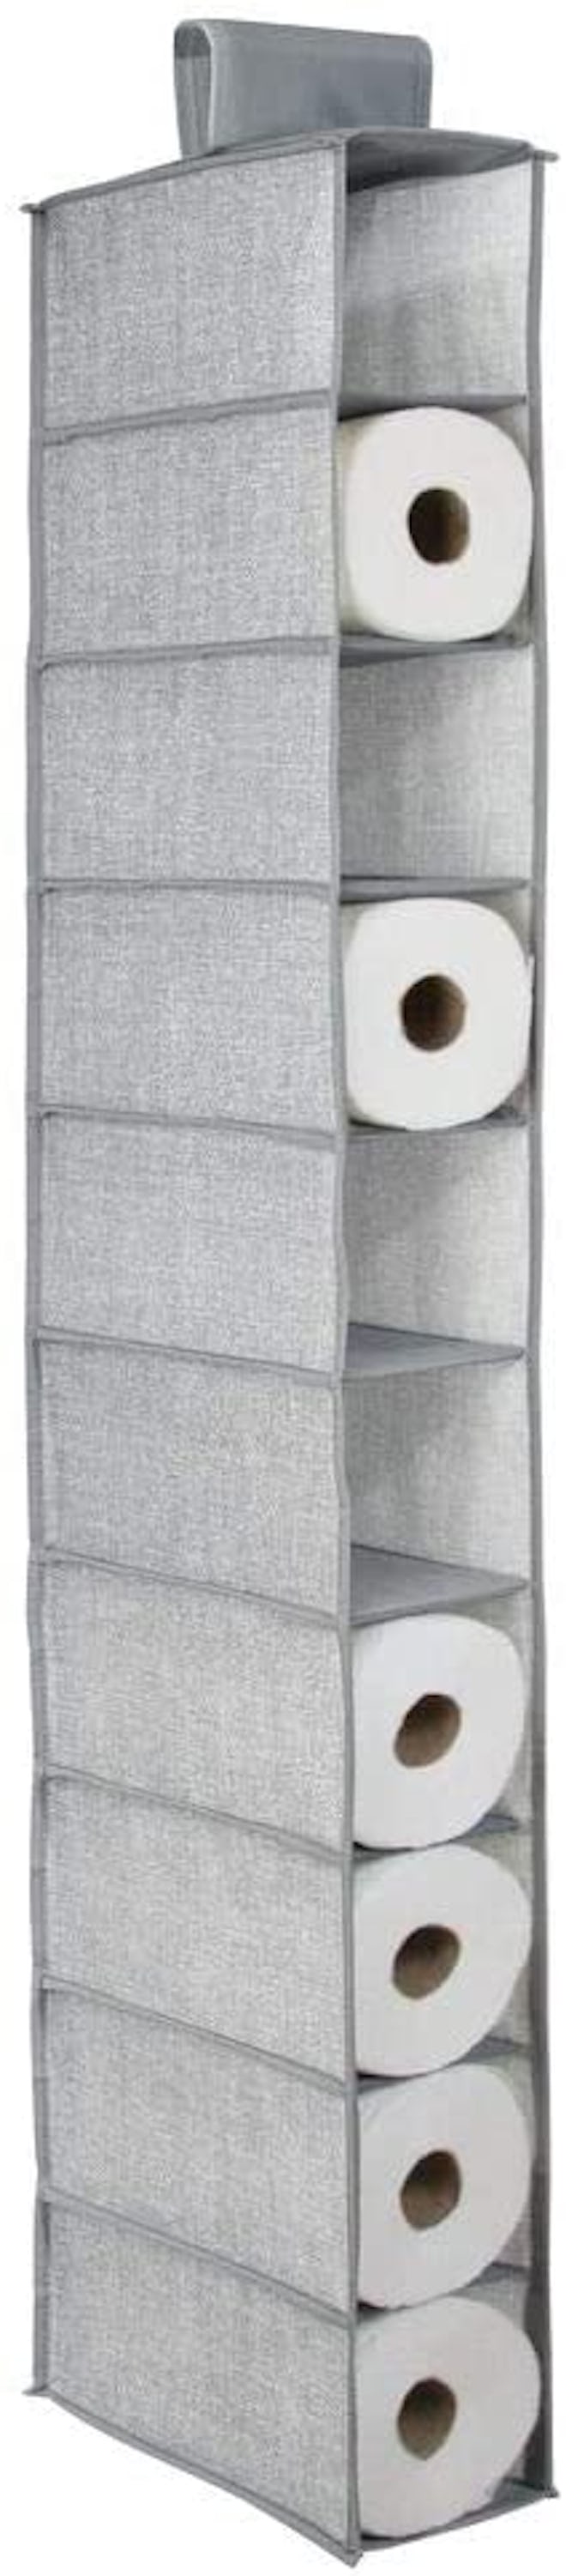 mDesign Hanging Paper Towel Storage Organizer